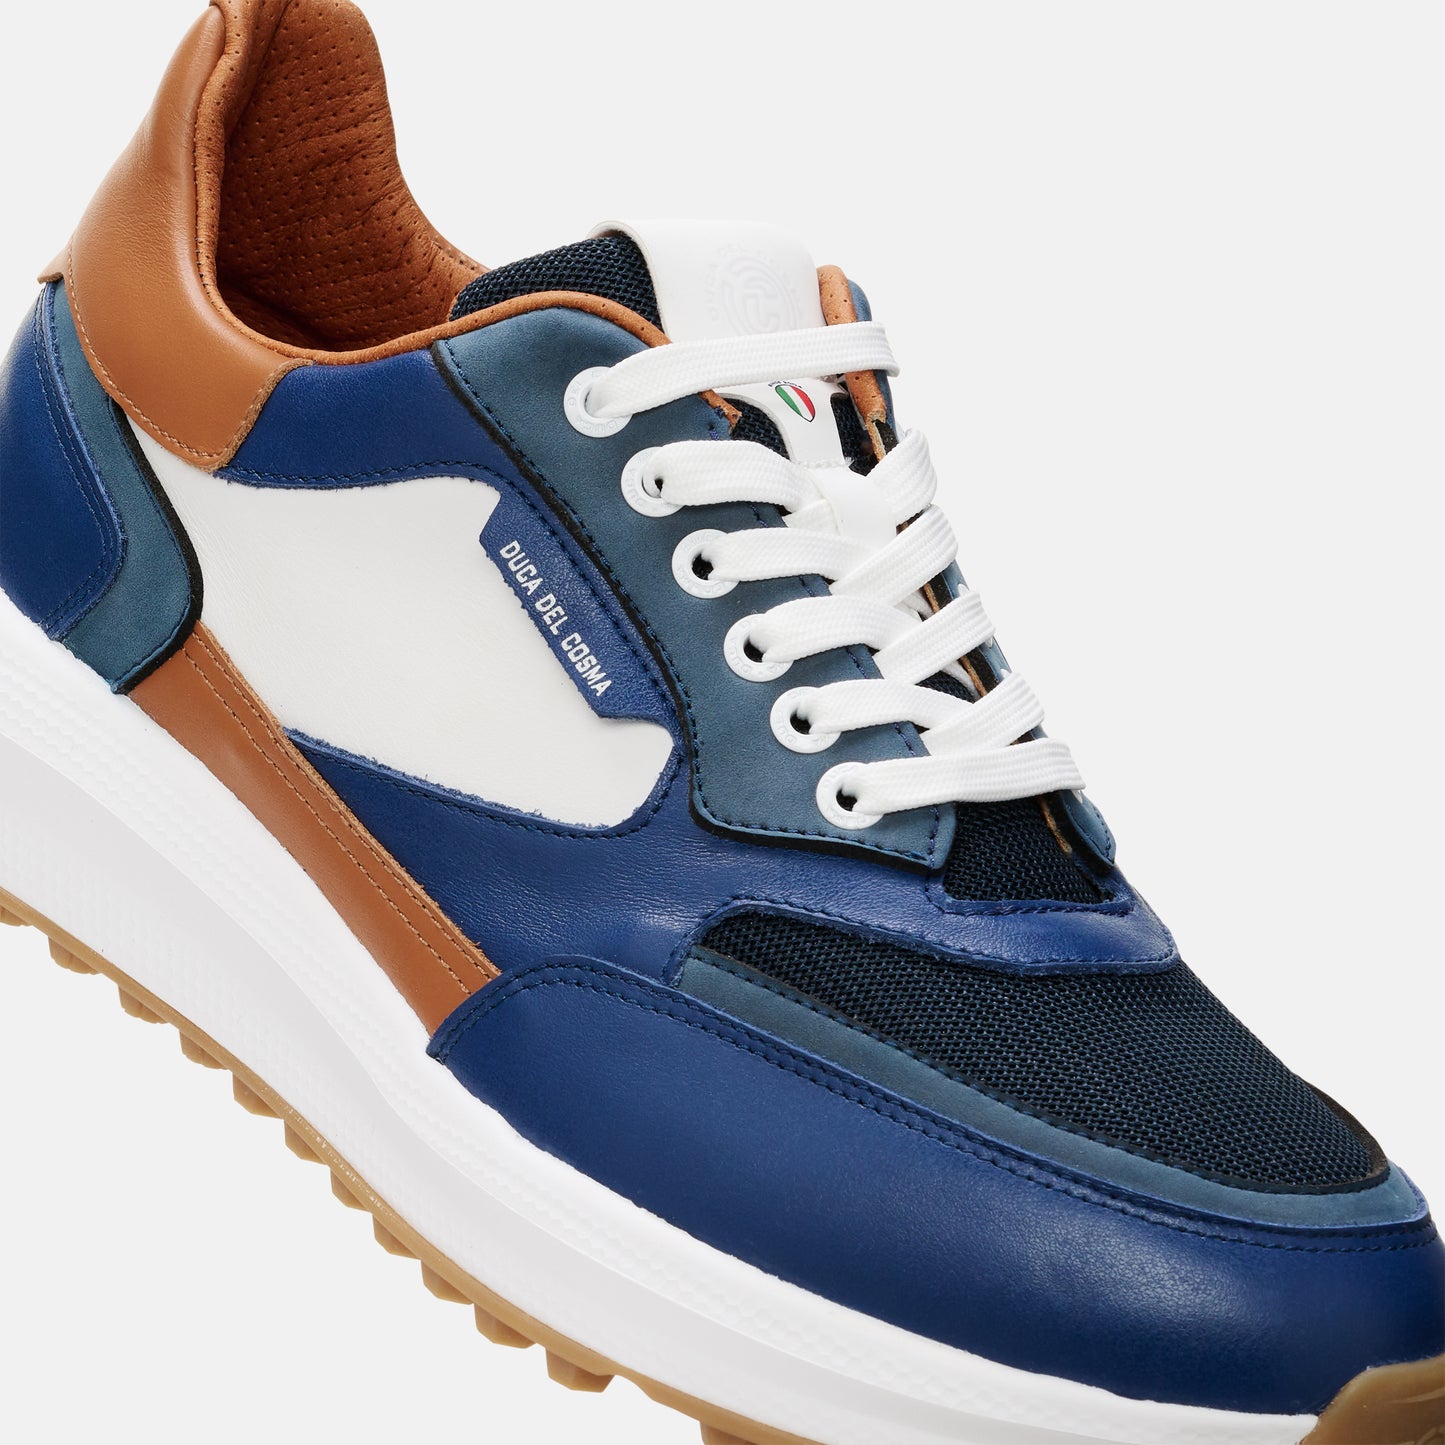 Lightweight Golf Shoes, Navy Golf Shoes, Blue Golf Shoes, Waterproof Golf Shoes, Spikeless Golf Shoes, Duca del Cosma Men's Golf Shoes, Sneaker golf shoes.